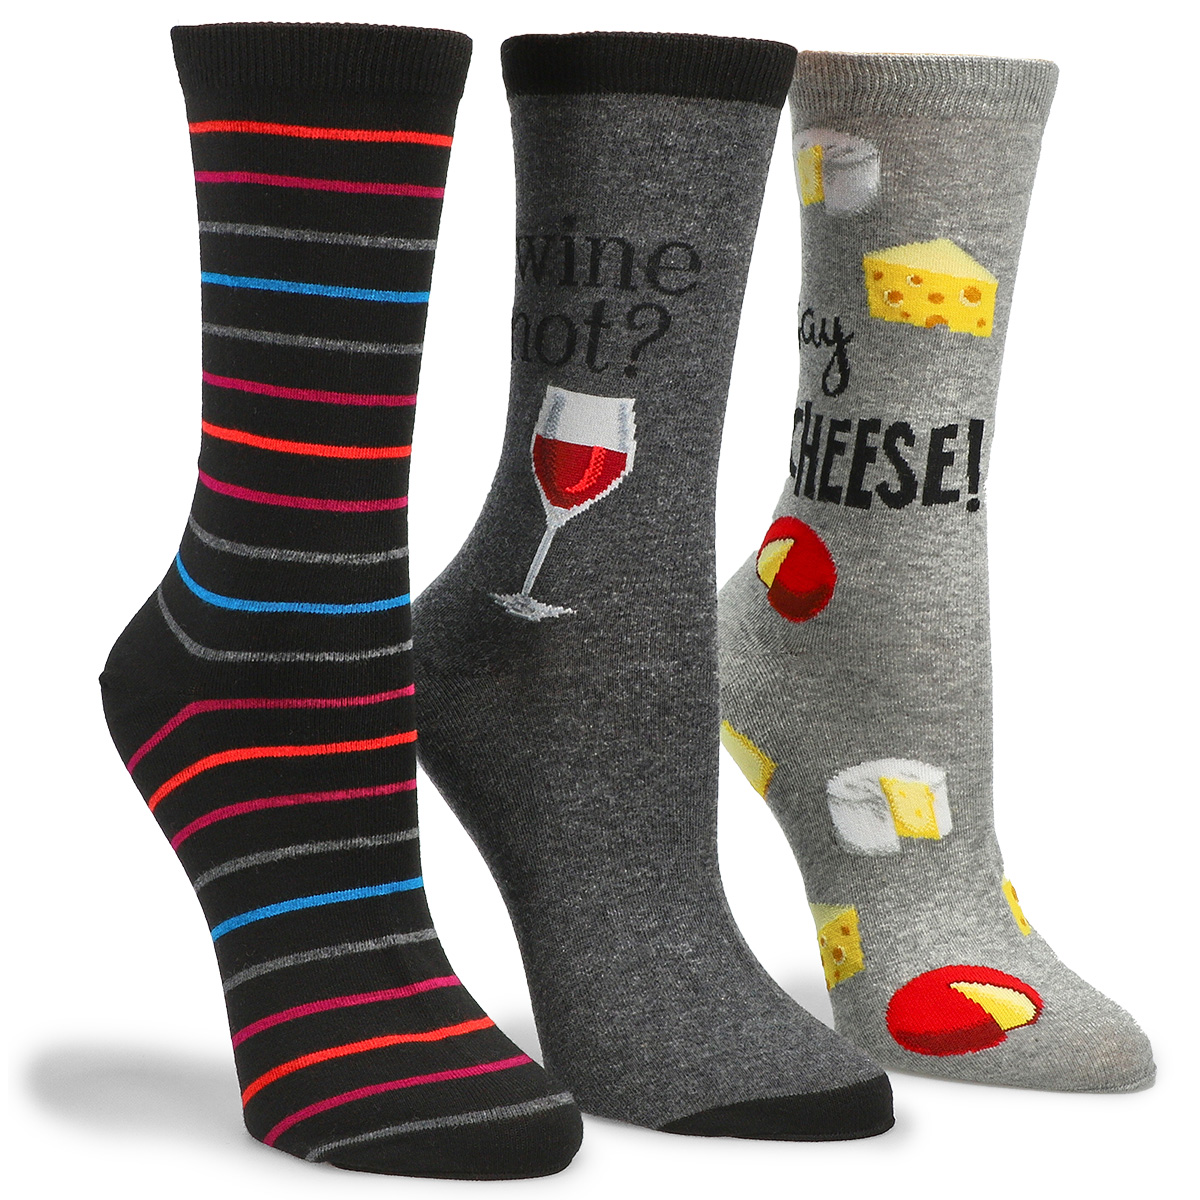 Women's Wine and Cheese Printed Socks